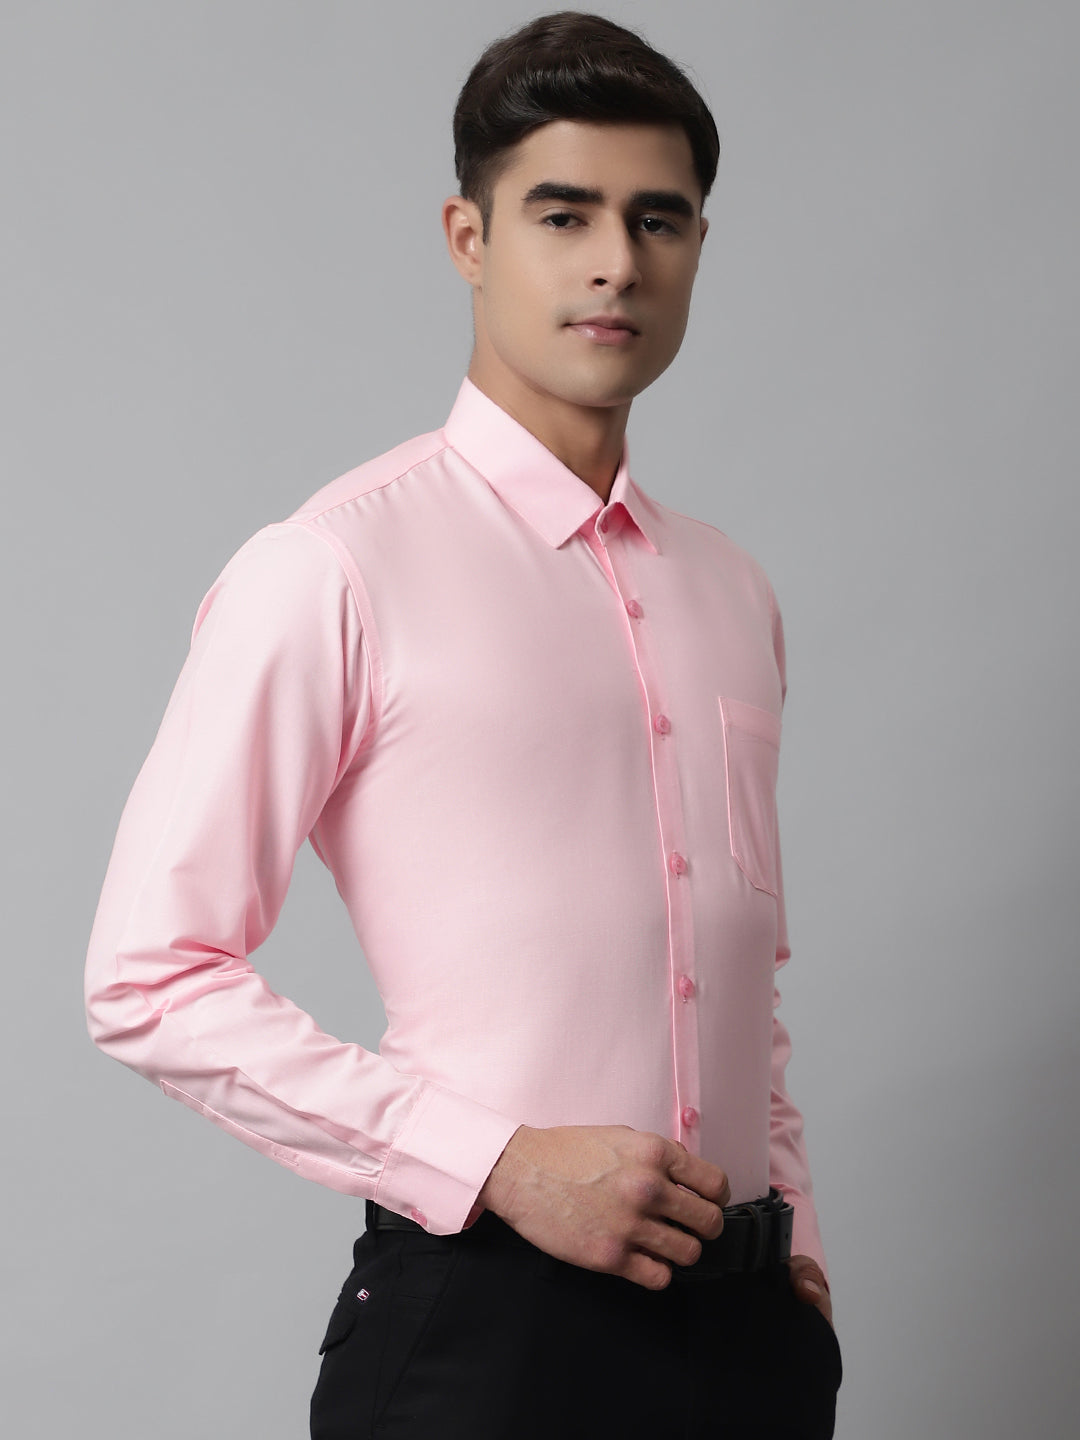 Jainish Men's Cotton Solid Light Pink Formal Shirt's